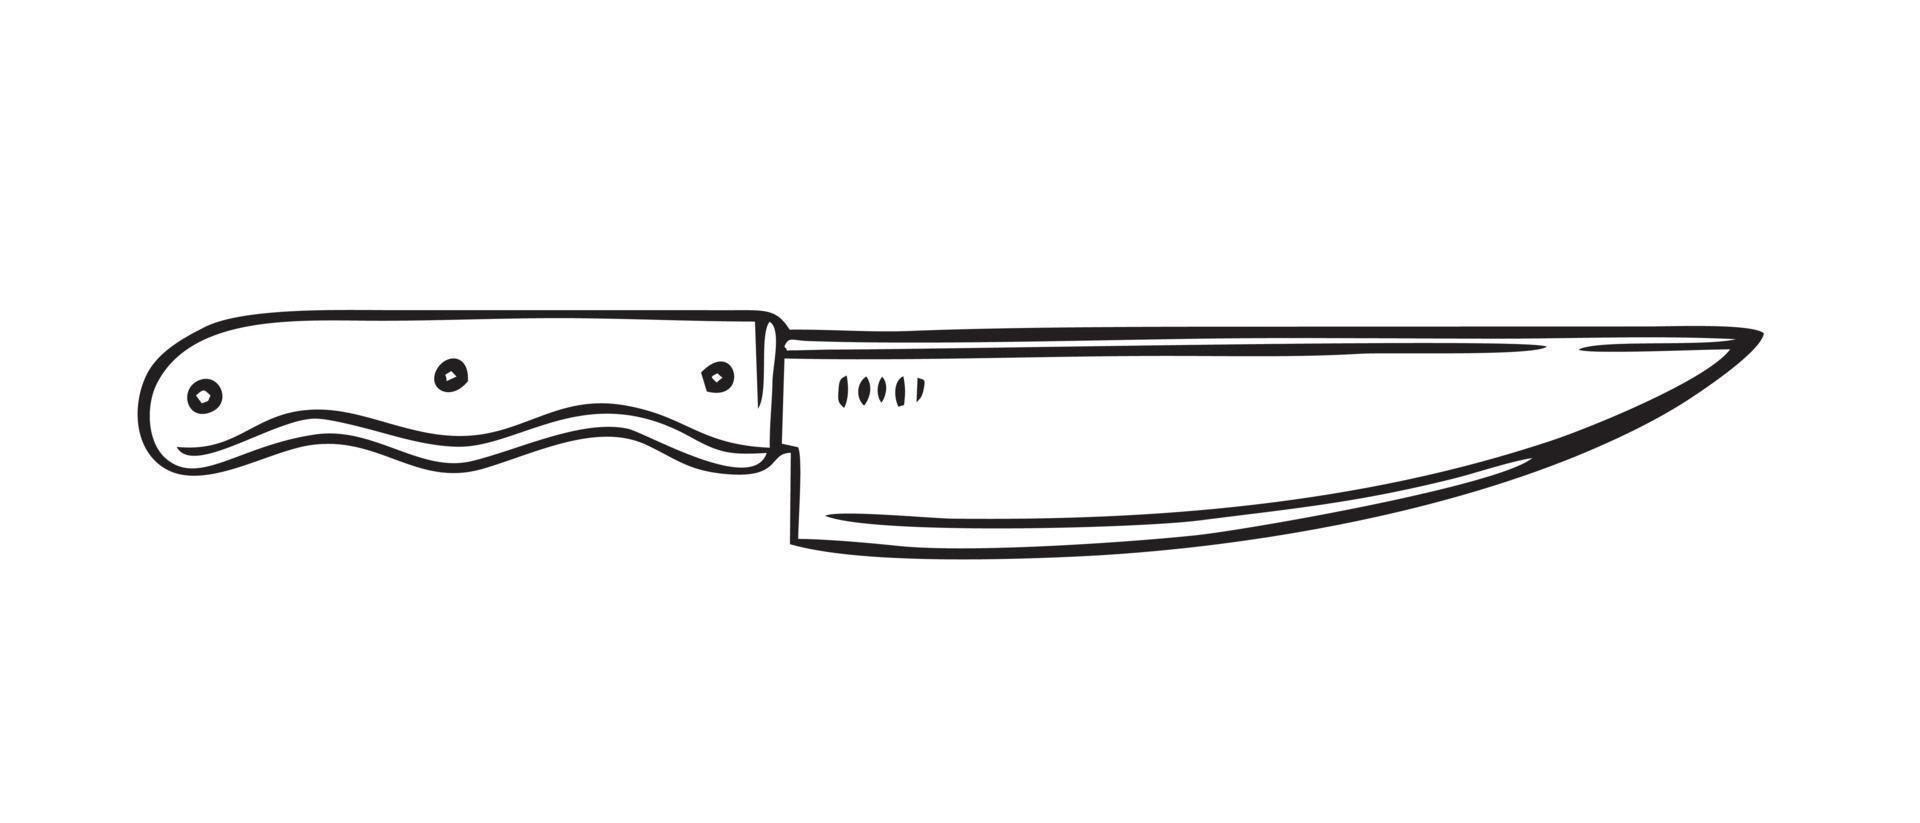 un gran cuchillo dibujado a mano. garabatear accesorios de cocina. ilustración vectorial vector